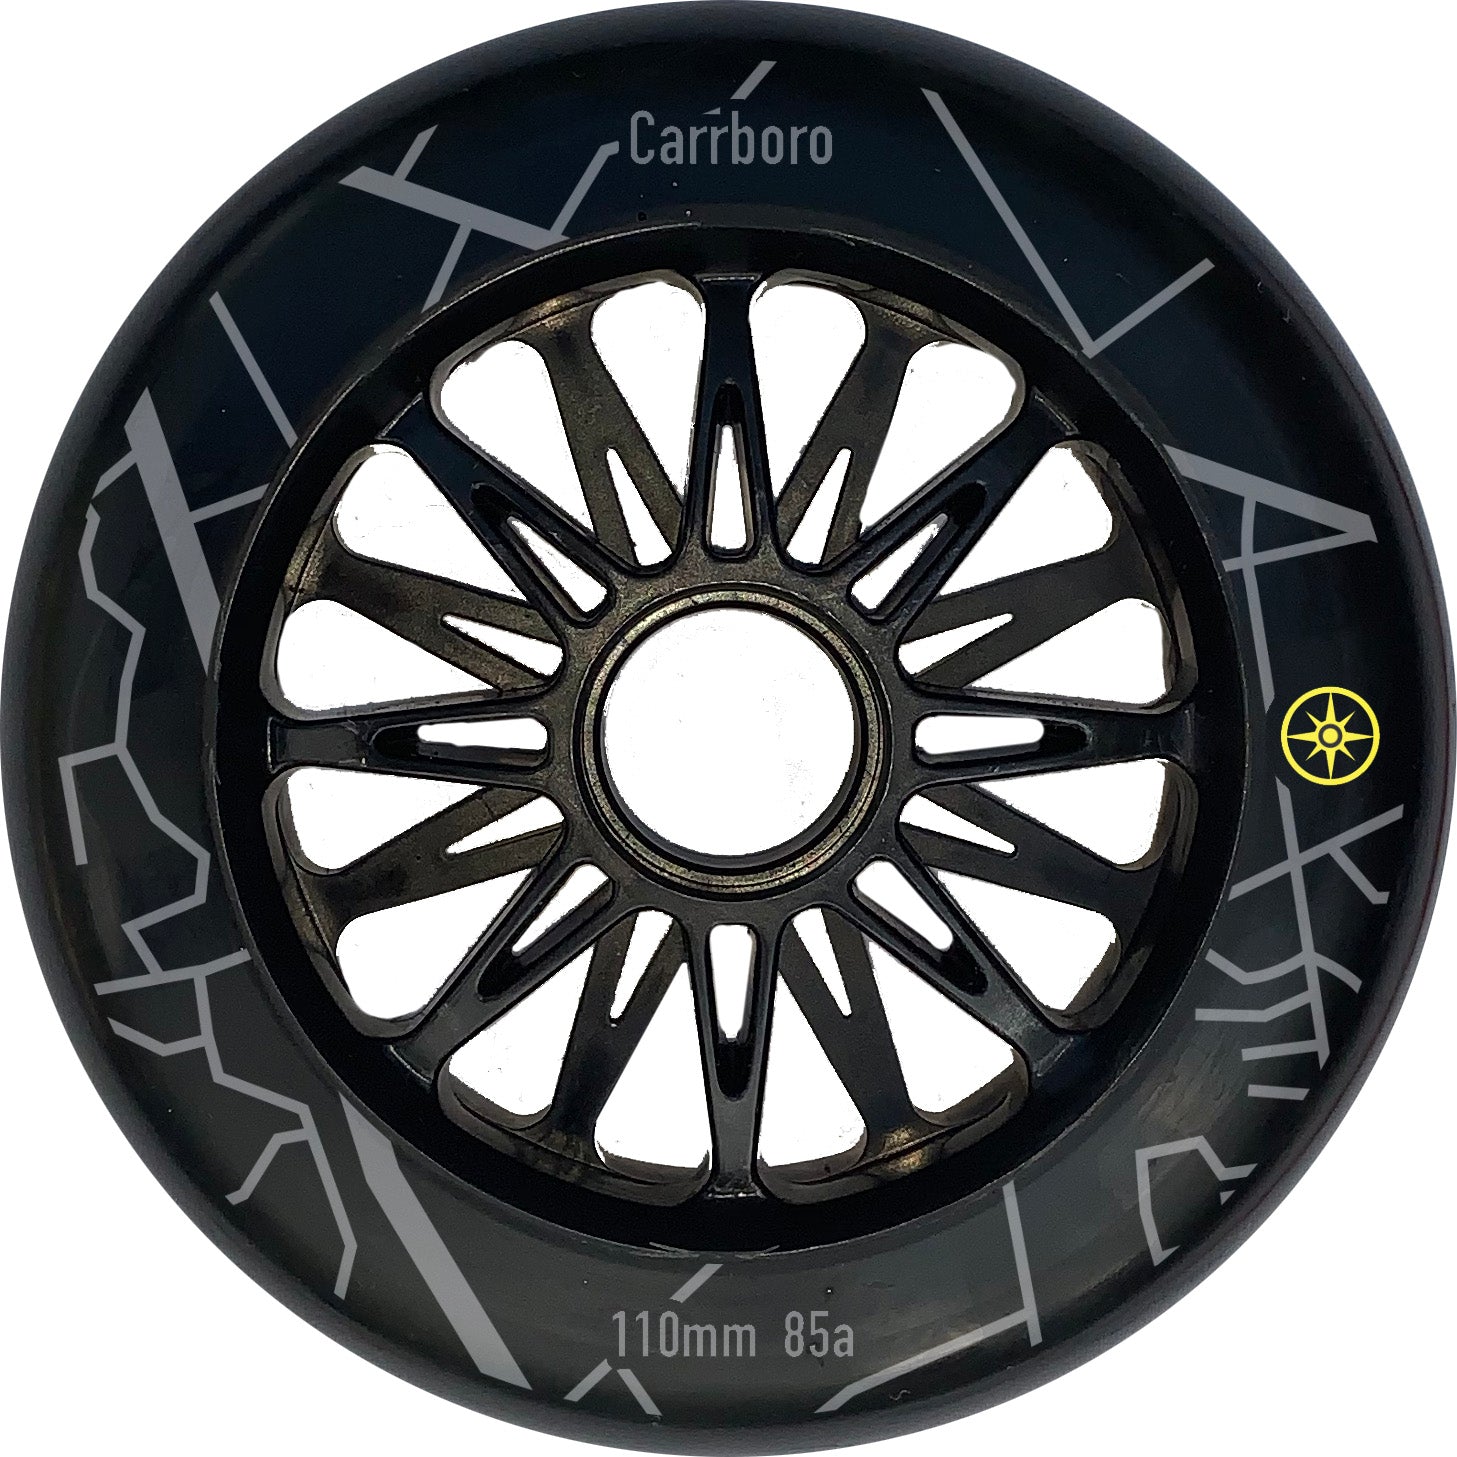 Compass Carboro 110mm inline wheel